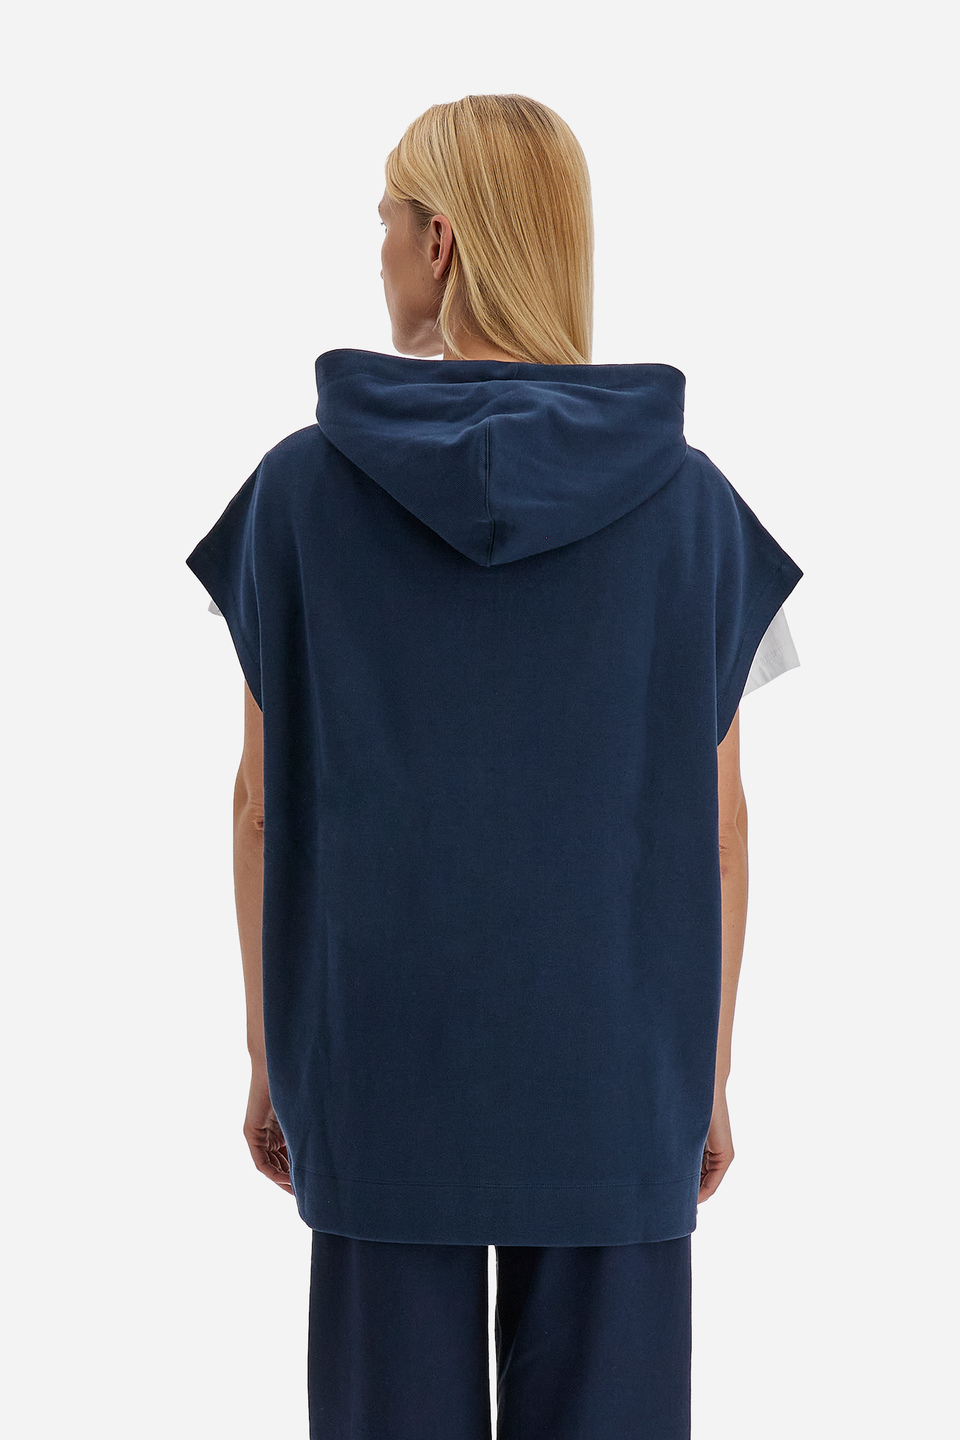 Women's sleeveless full-zip sweatshirt in solid color Polo Academy - Vondra | La Martina - Official Online Shop